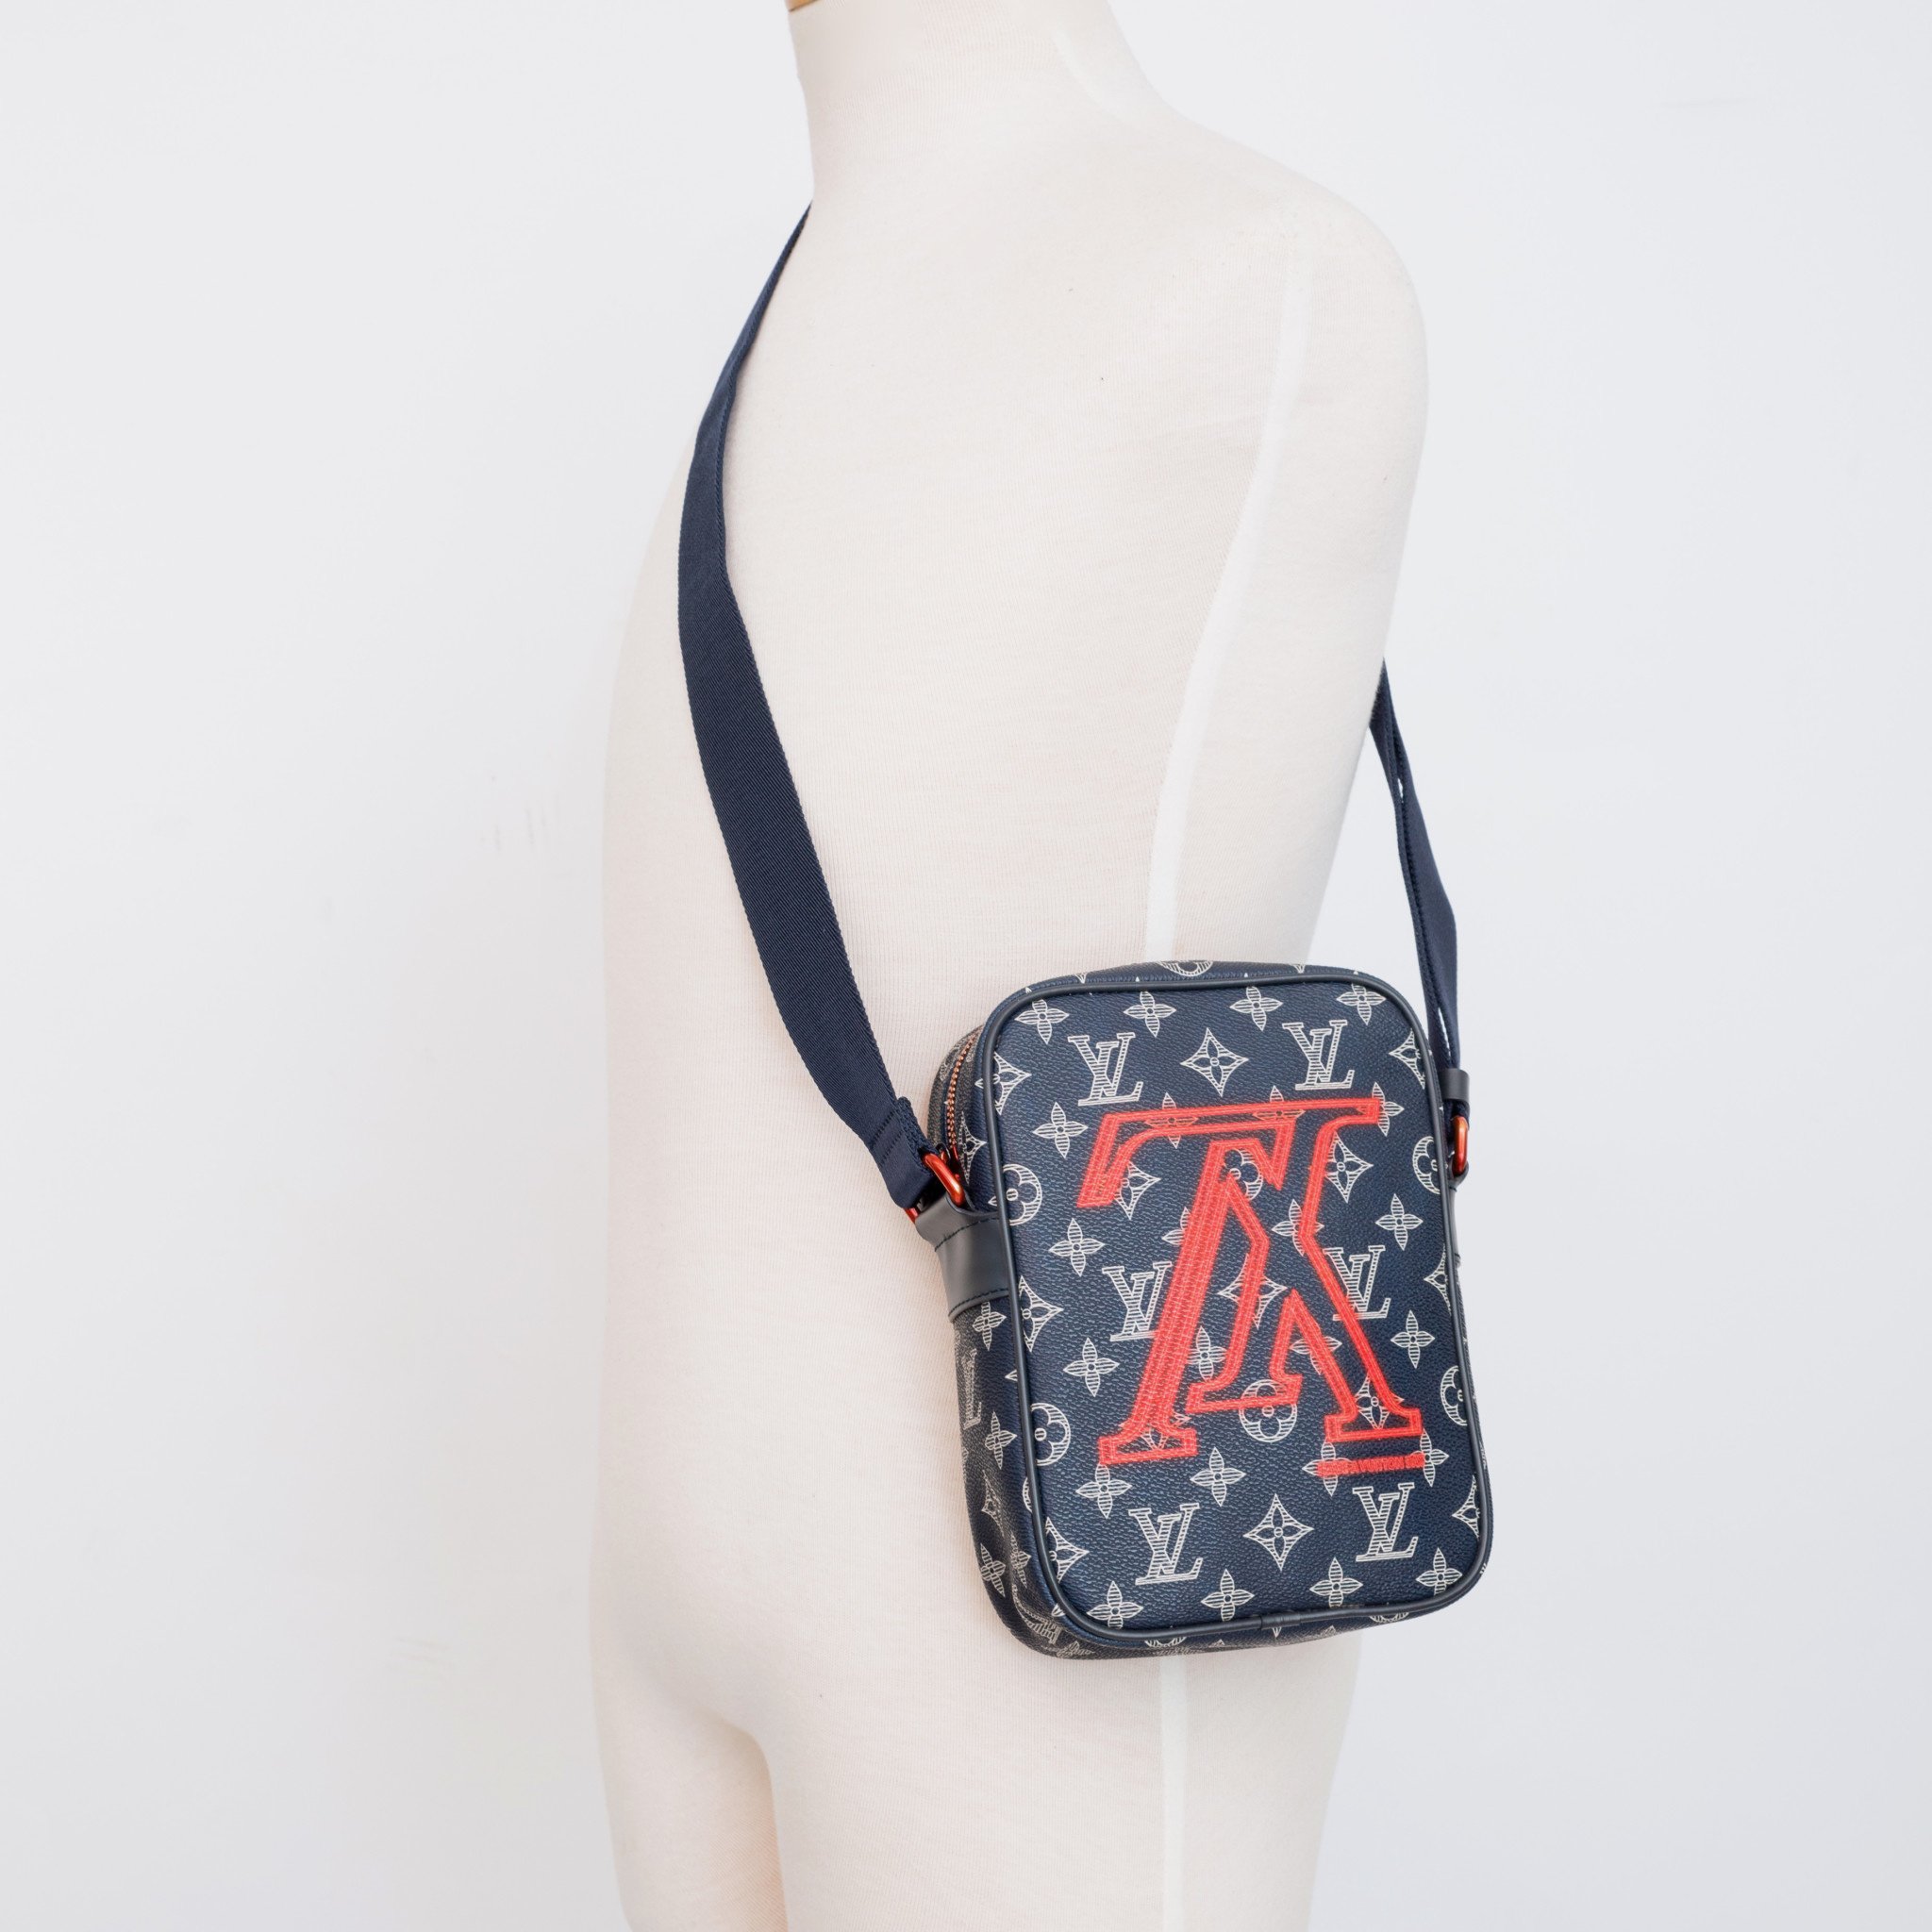 ❌SOLD❌ Louis Vuitton Monogram Galaxy Alpha Messenger bag by Kim Jones -  Reetzy